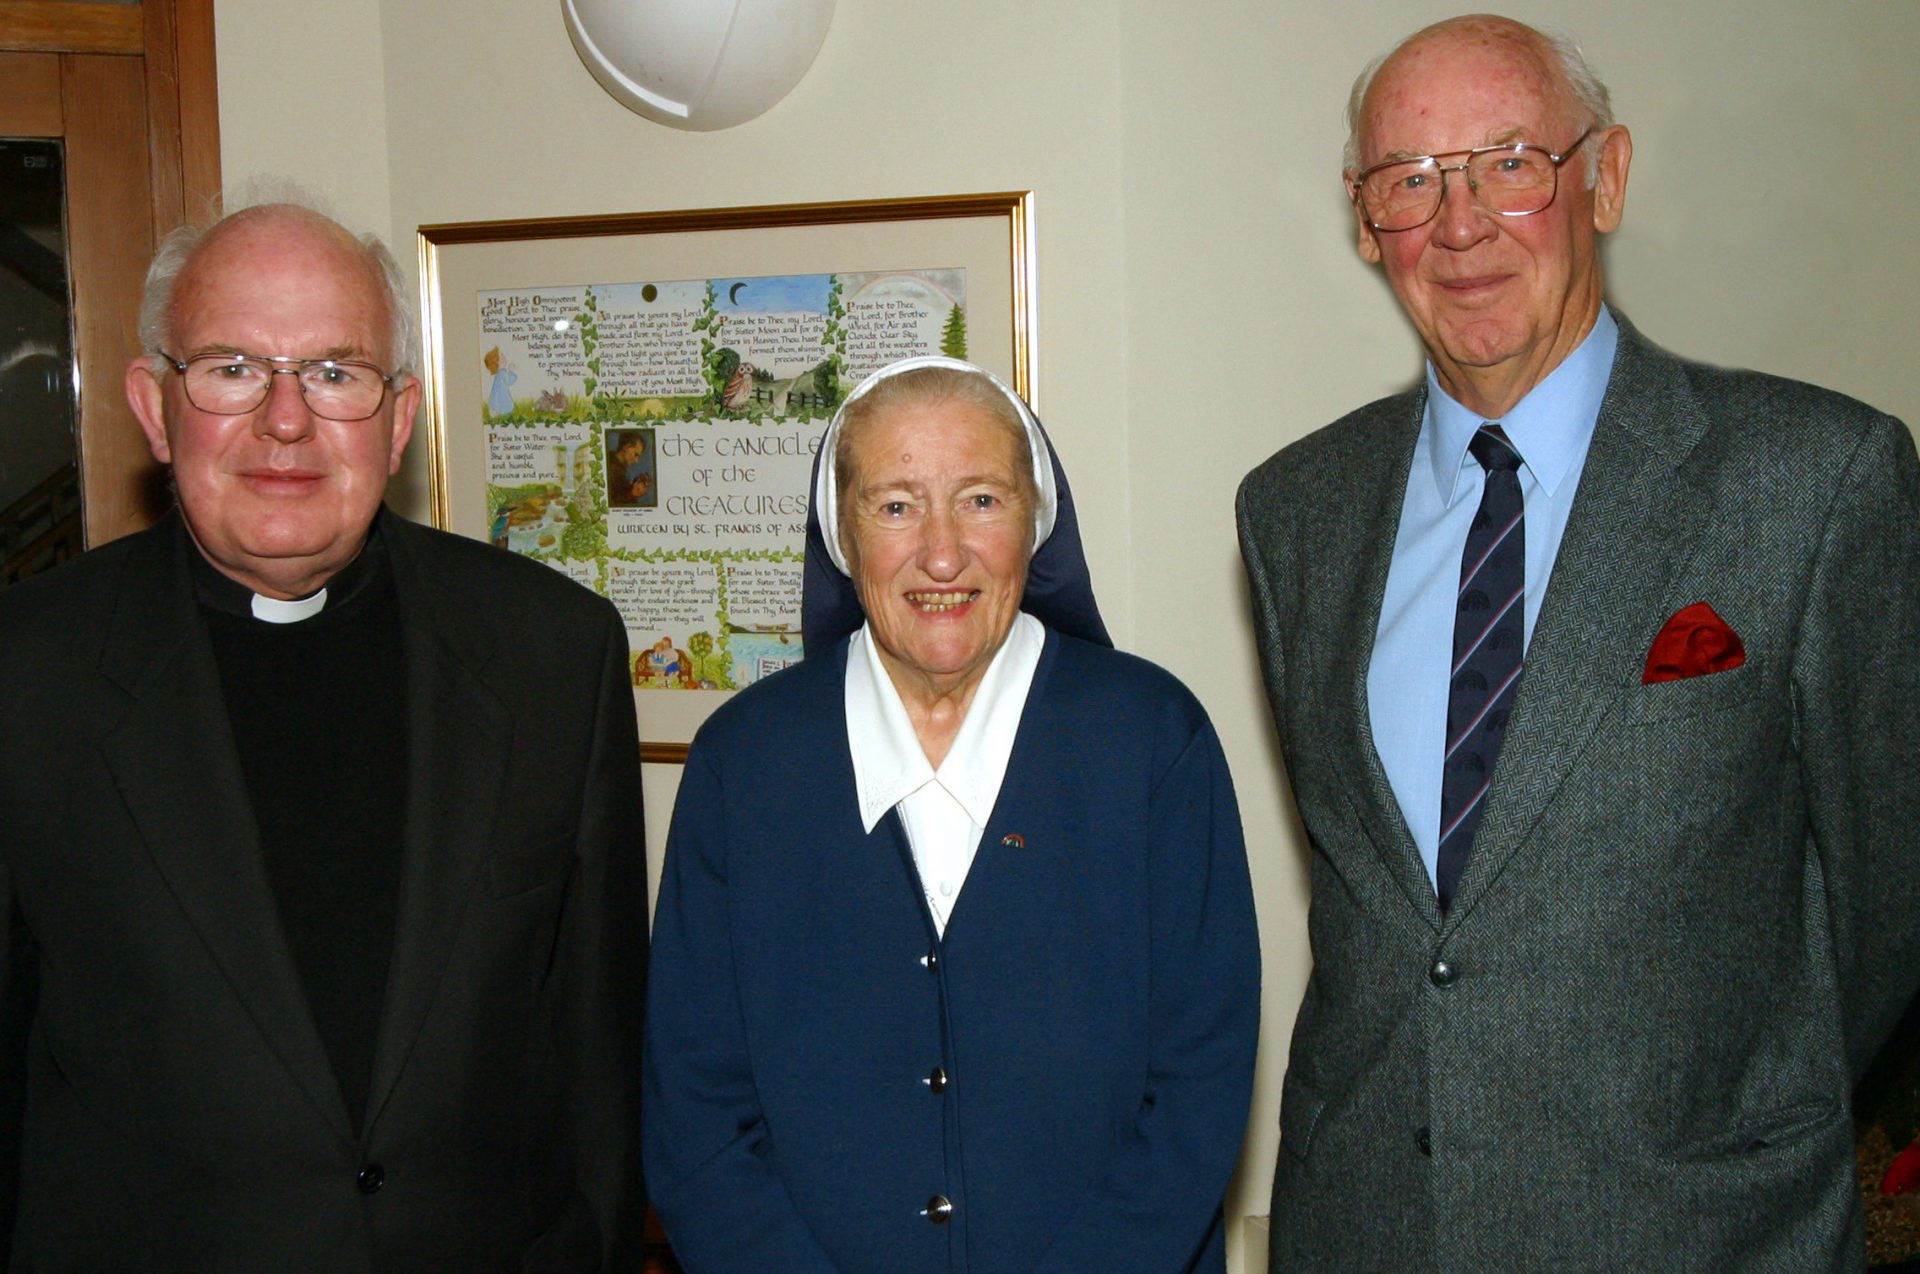 Archbishop Patrick Kelly Sister Aloysius and Robin Wood CBE, Chairman of Francis House